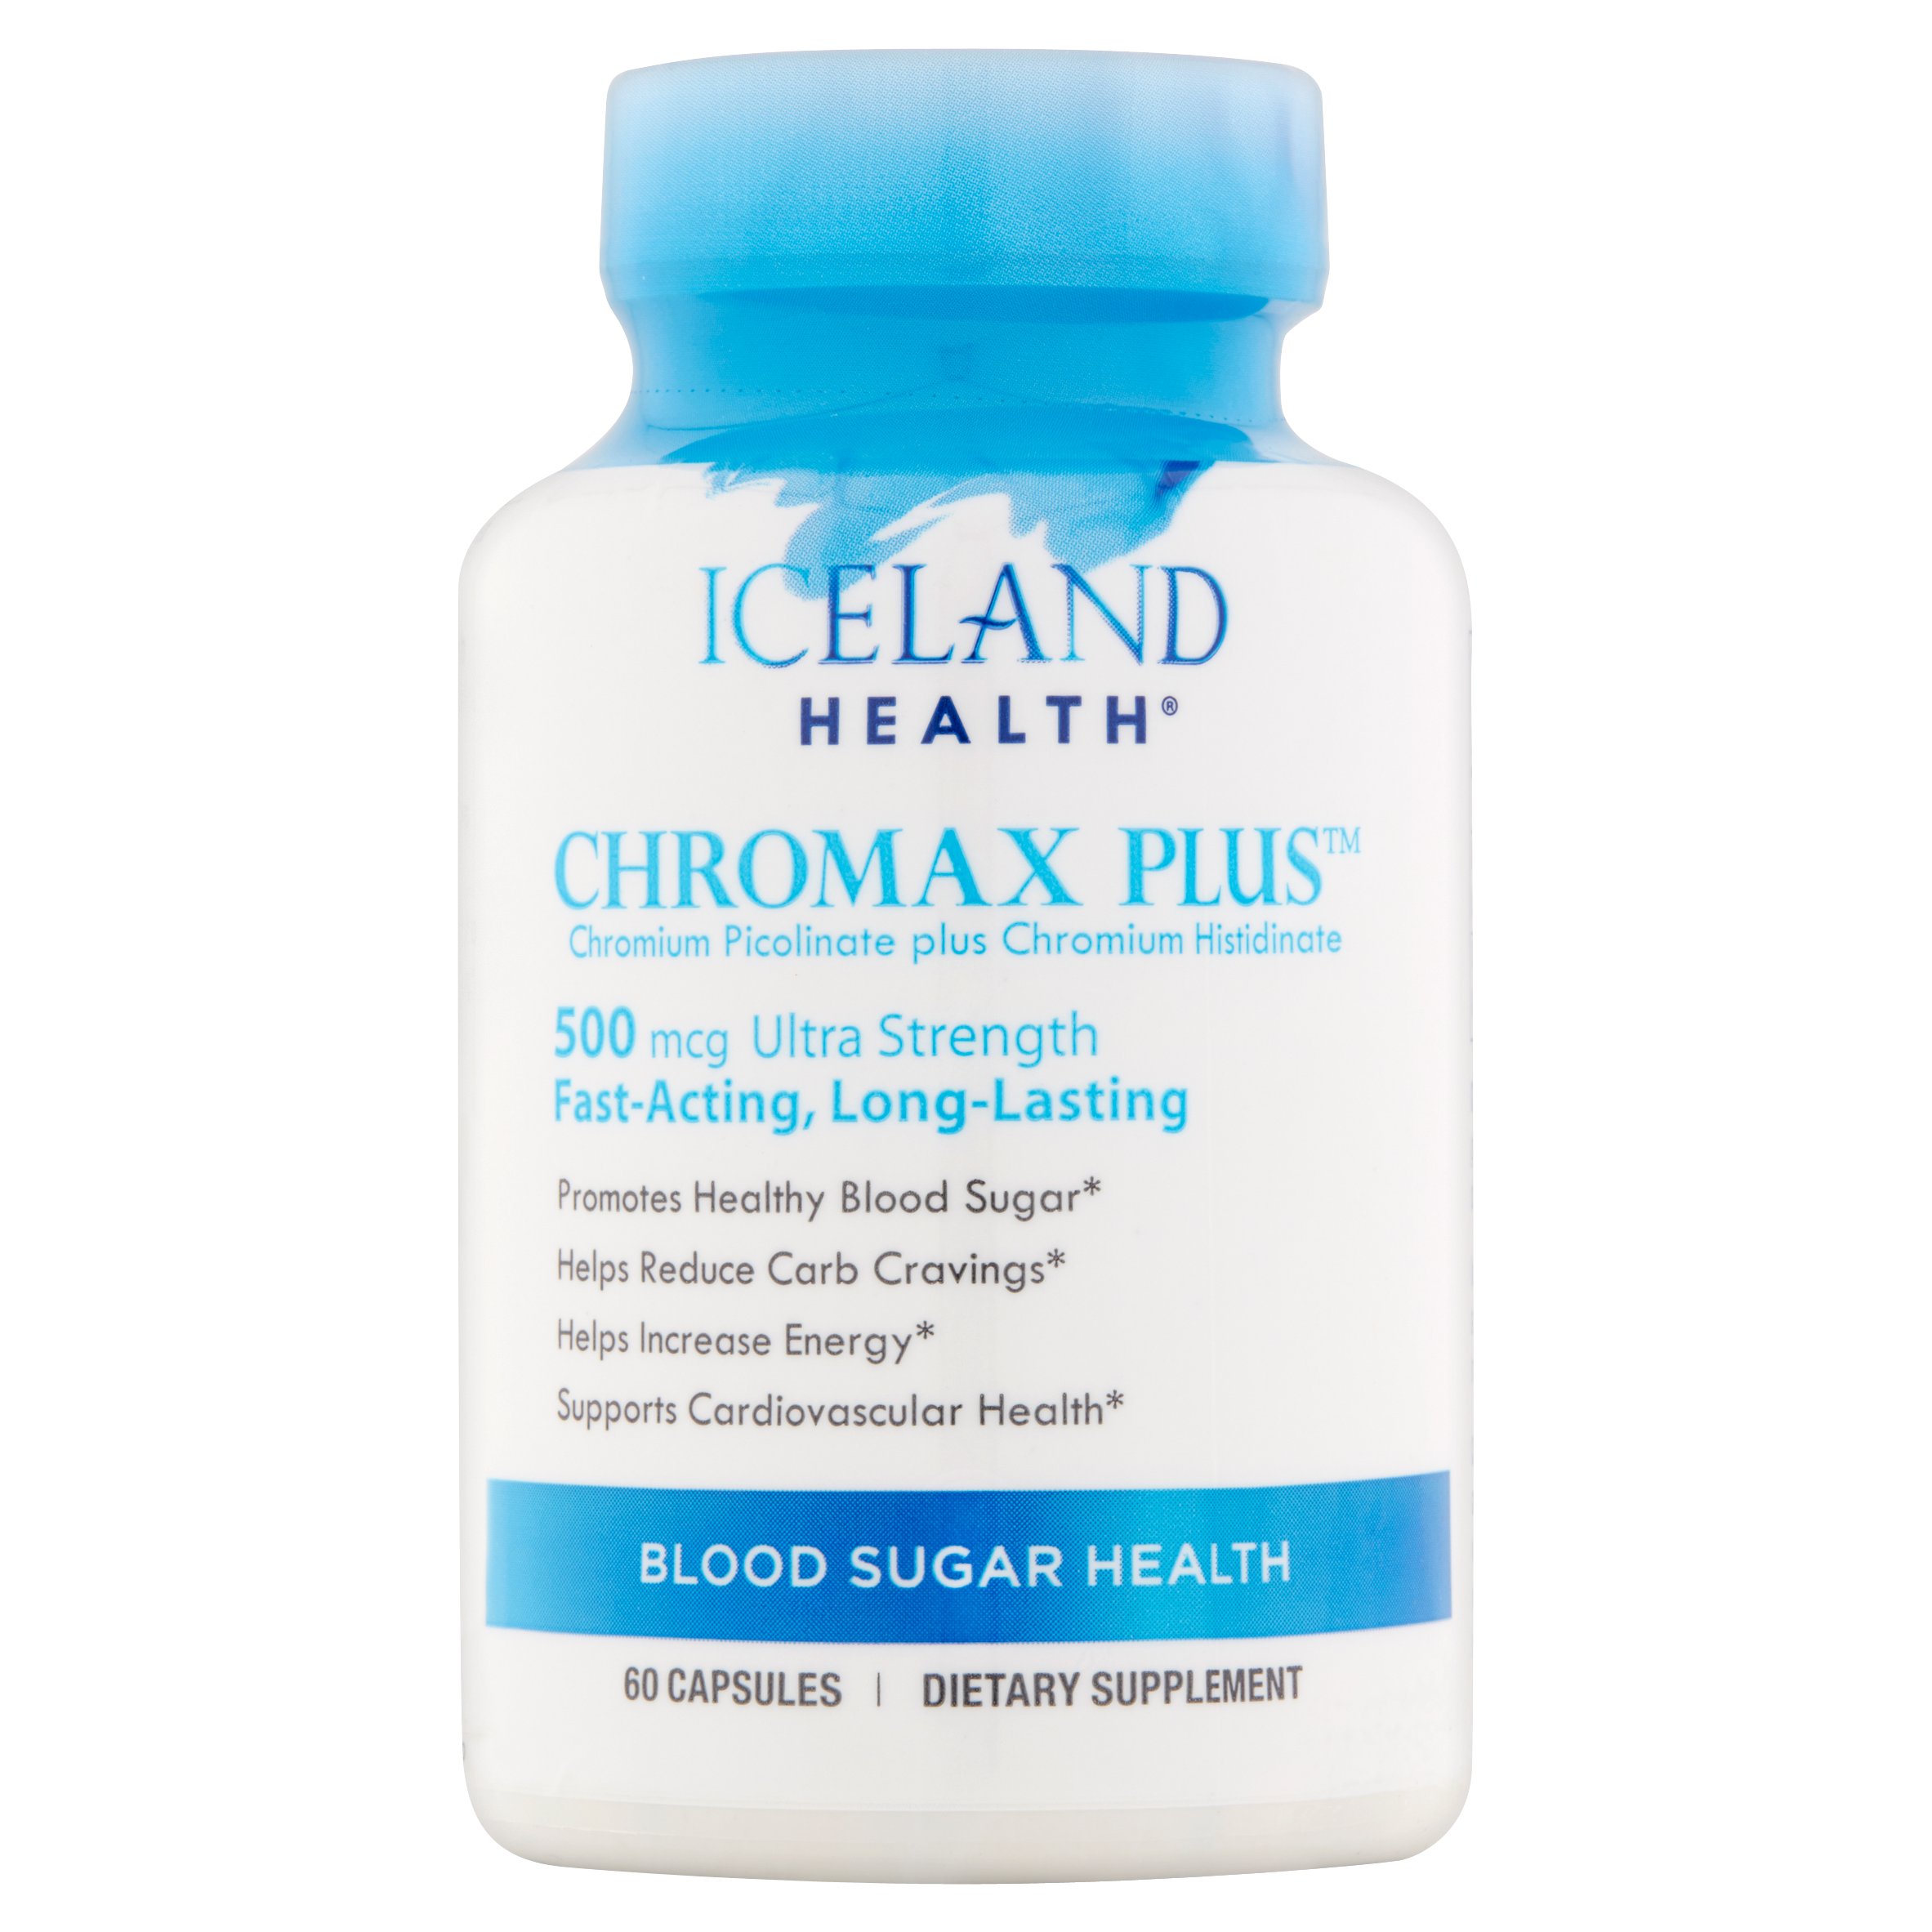 Iceland Health Chromax Plus Blood Sugar Health Capsules, 60 count - image 1 of 6